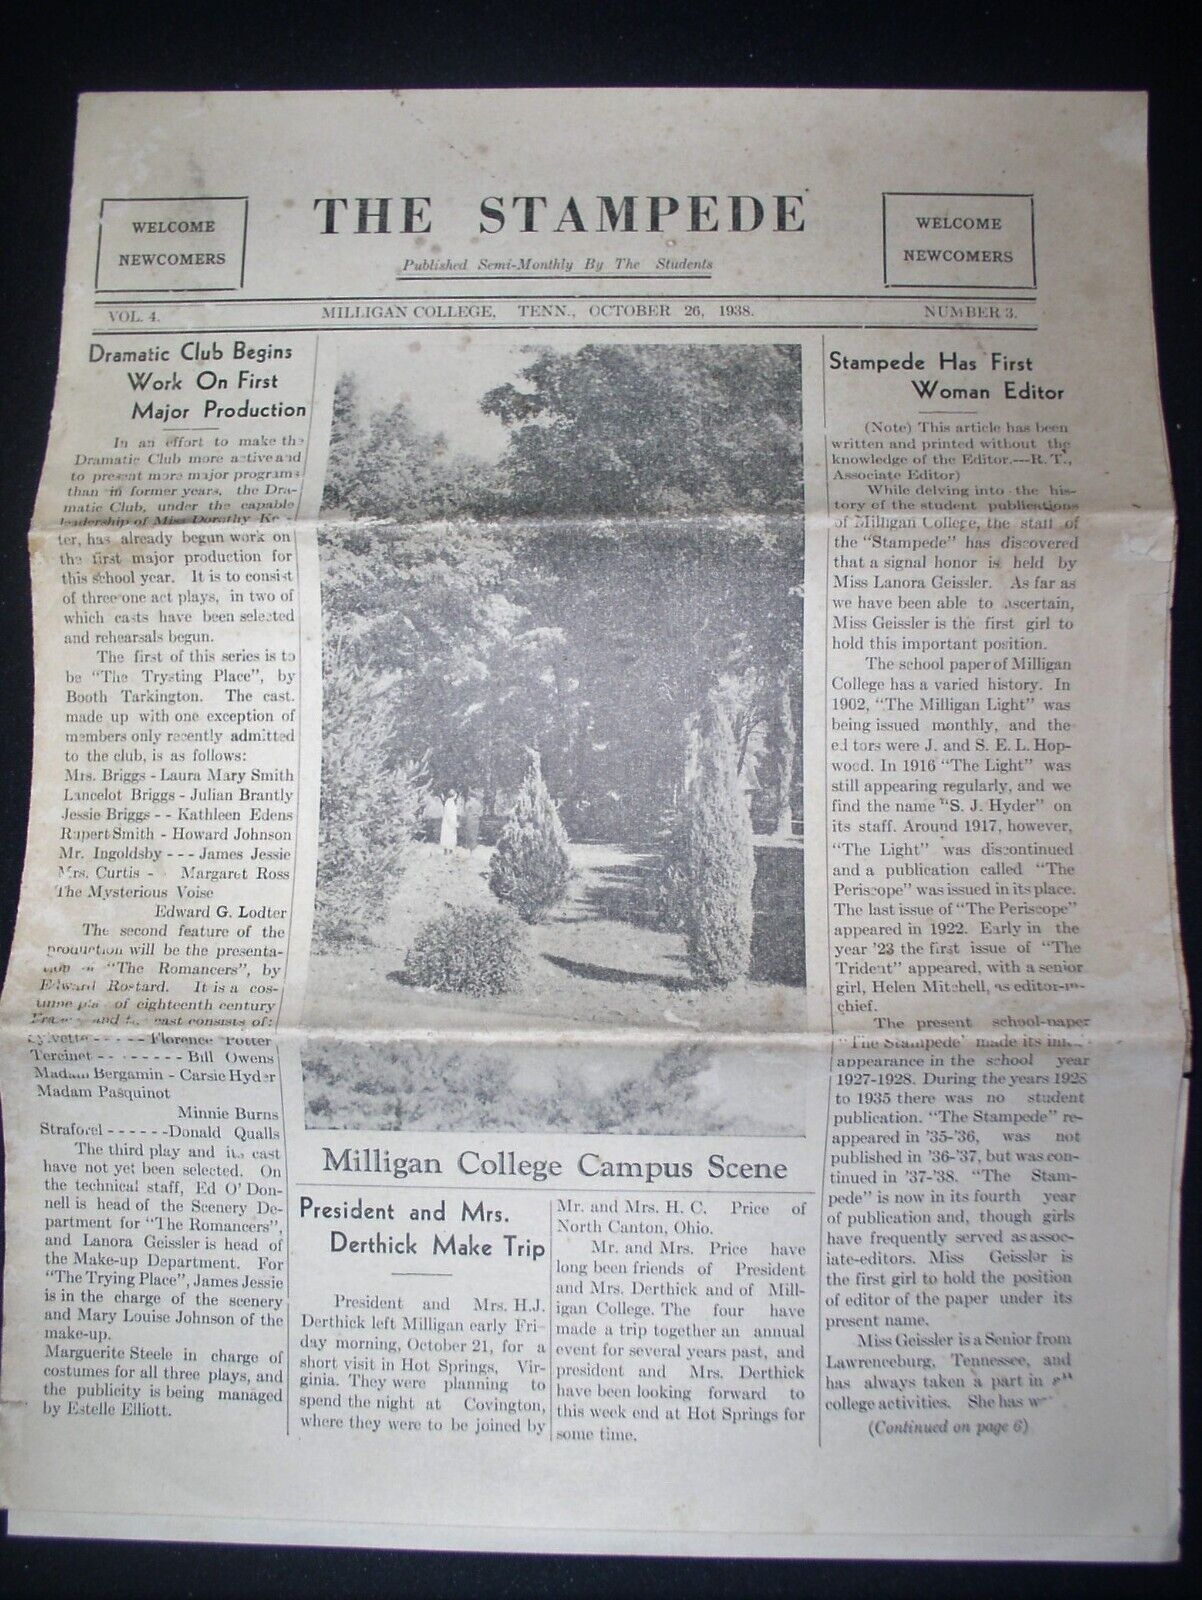 Milligan College (Univ.) Tennessee, The Stampede Oct. 26, 1938 College Newspaper